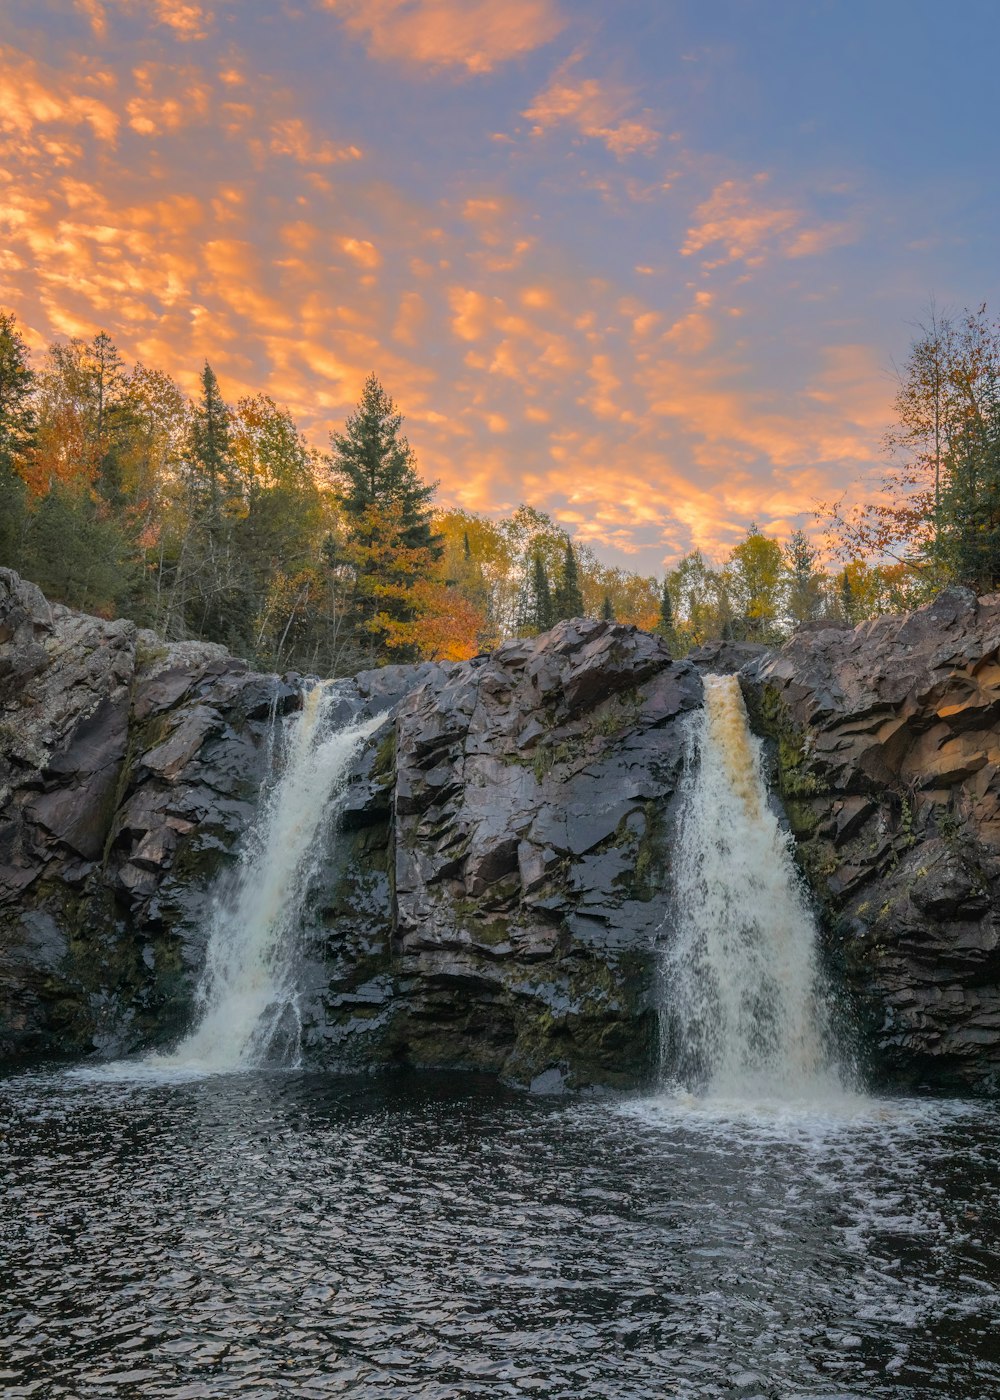 waterfalls on rocky mountain during sunset